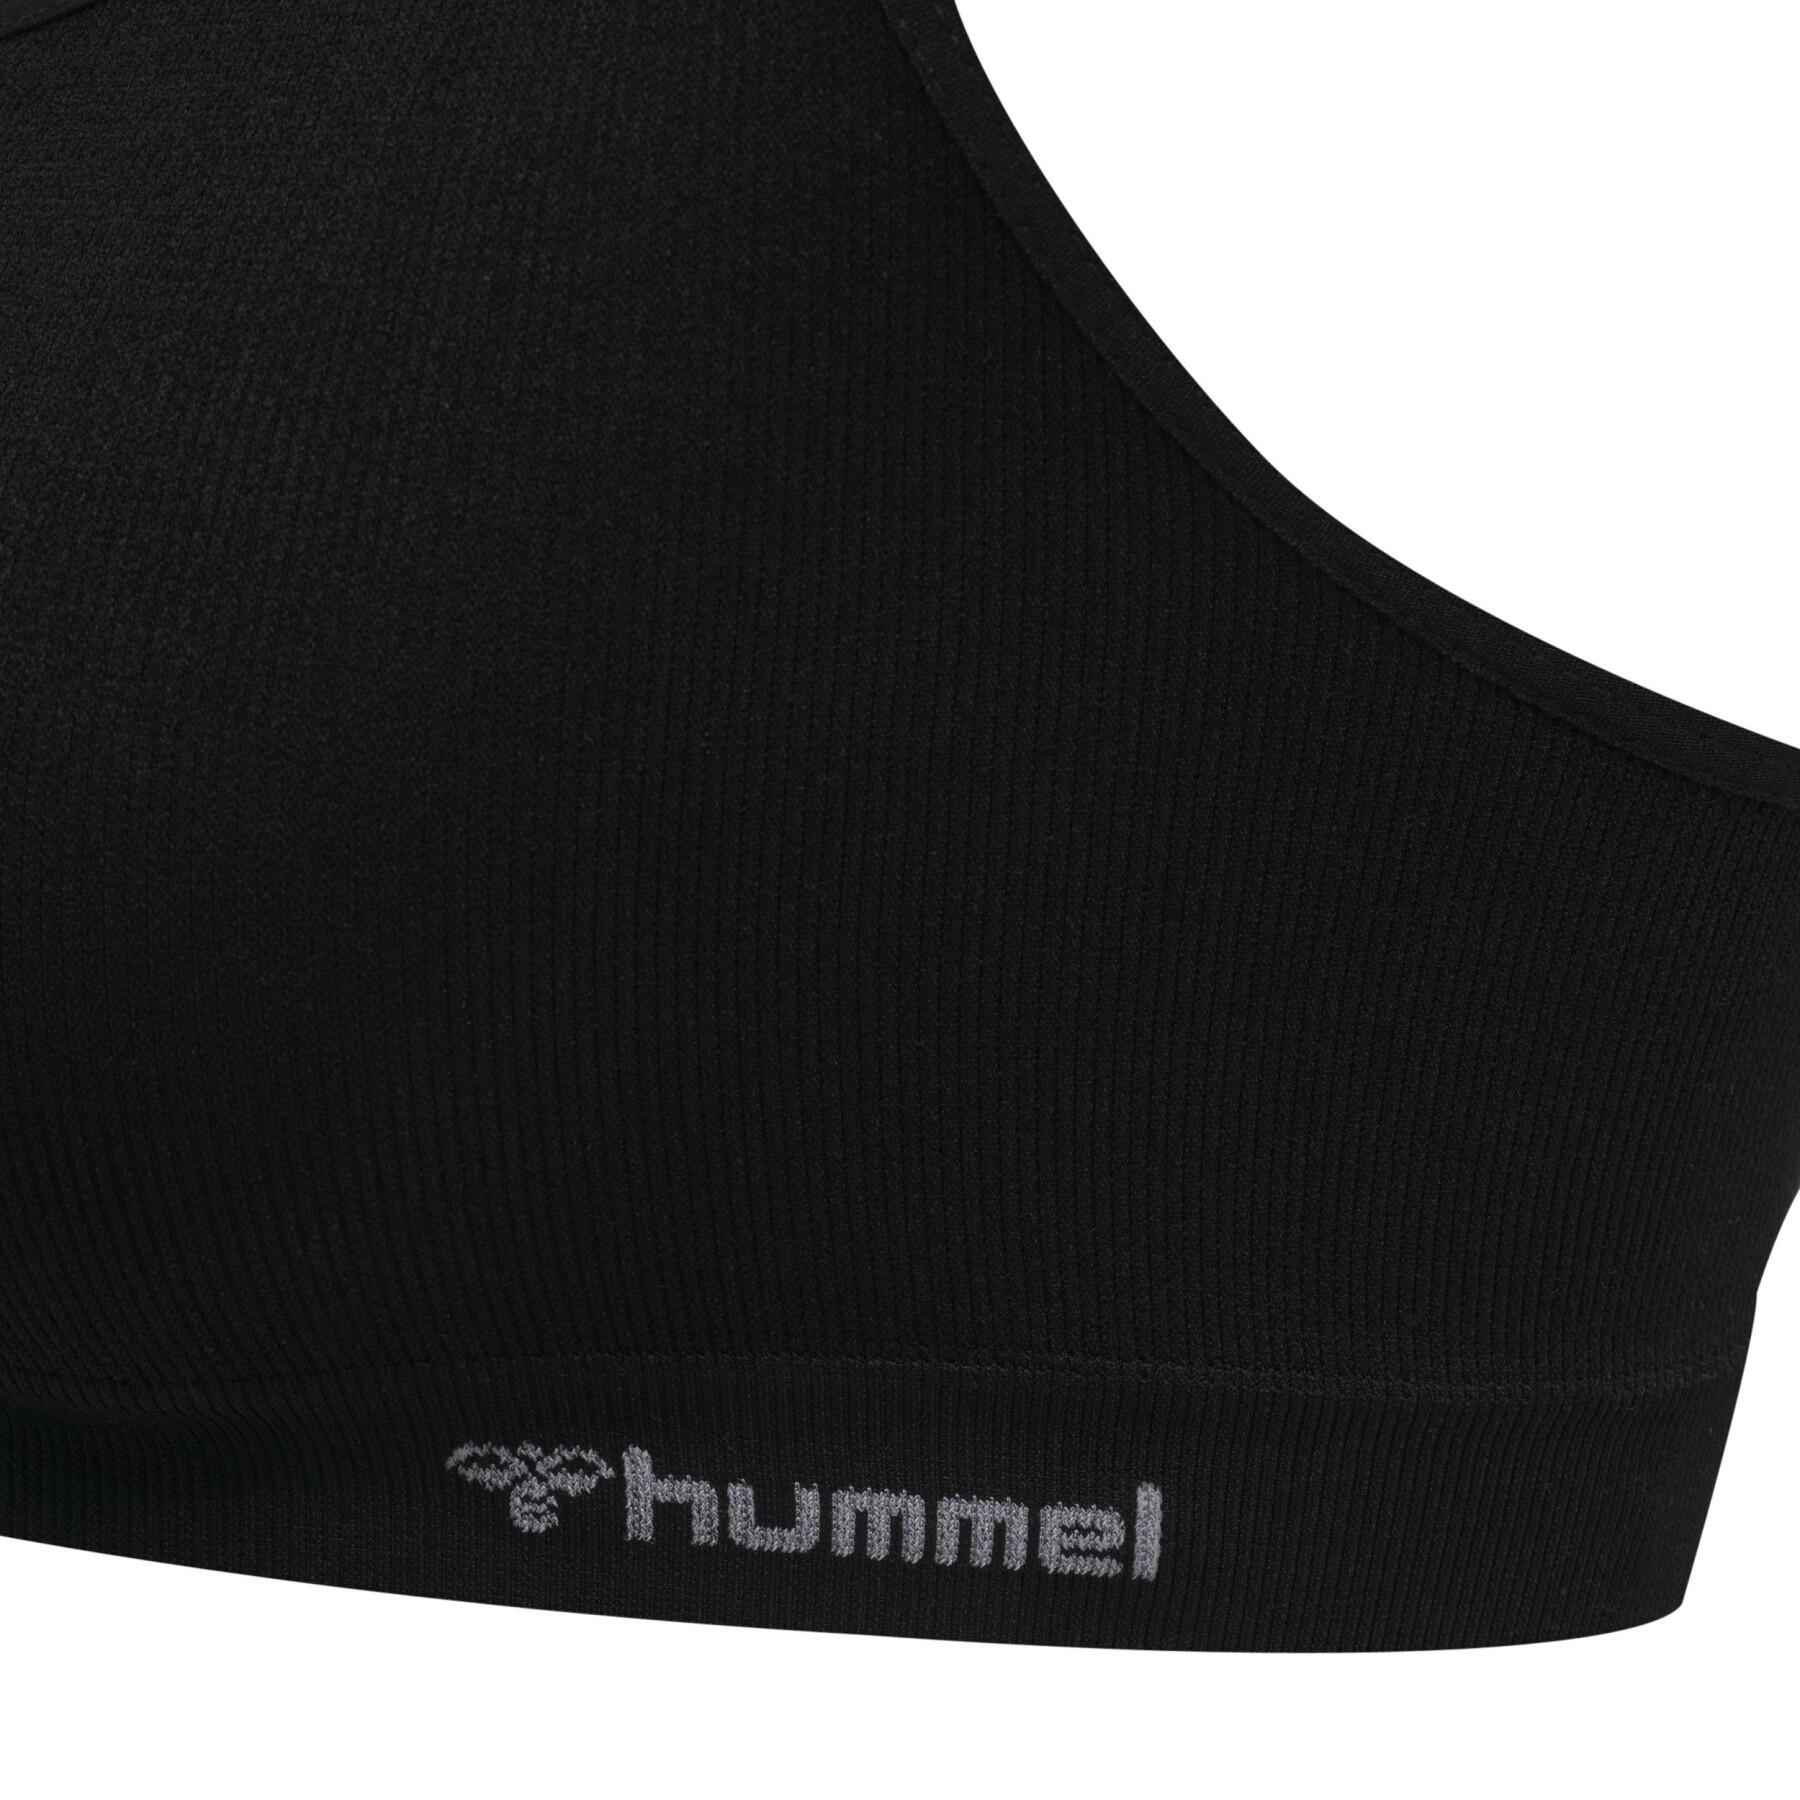 Women's bras Hummel Juno (x3)